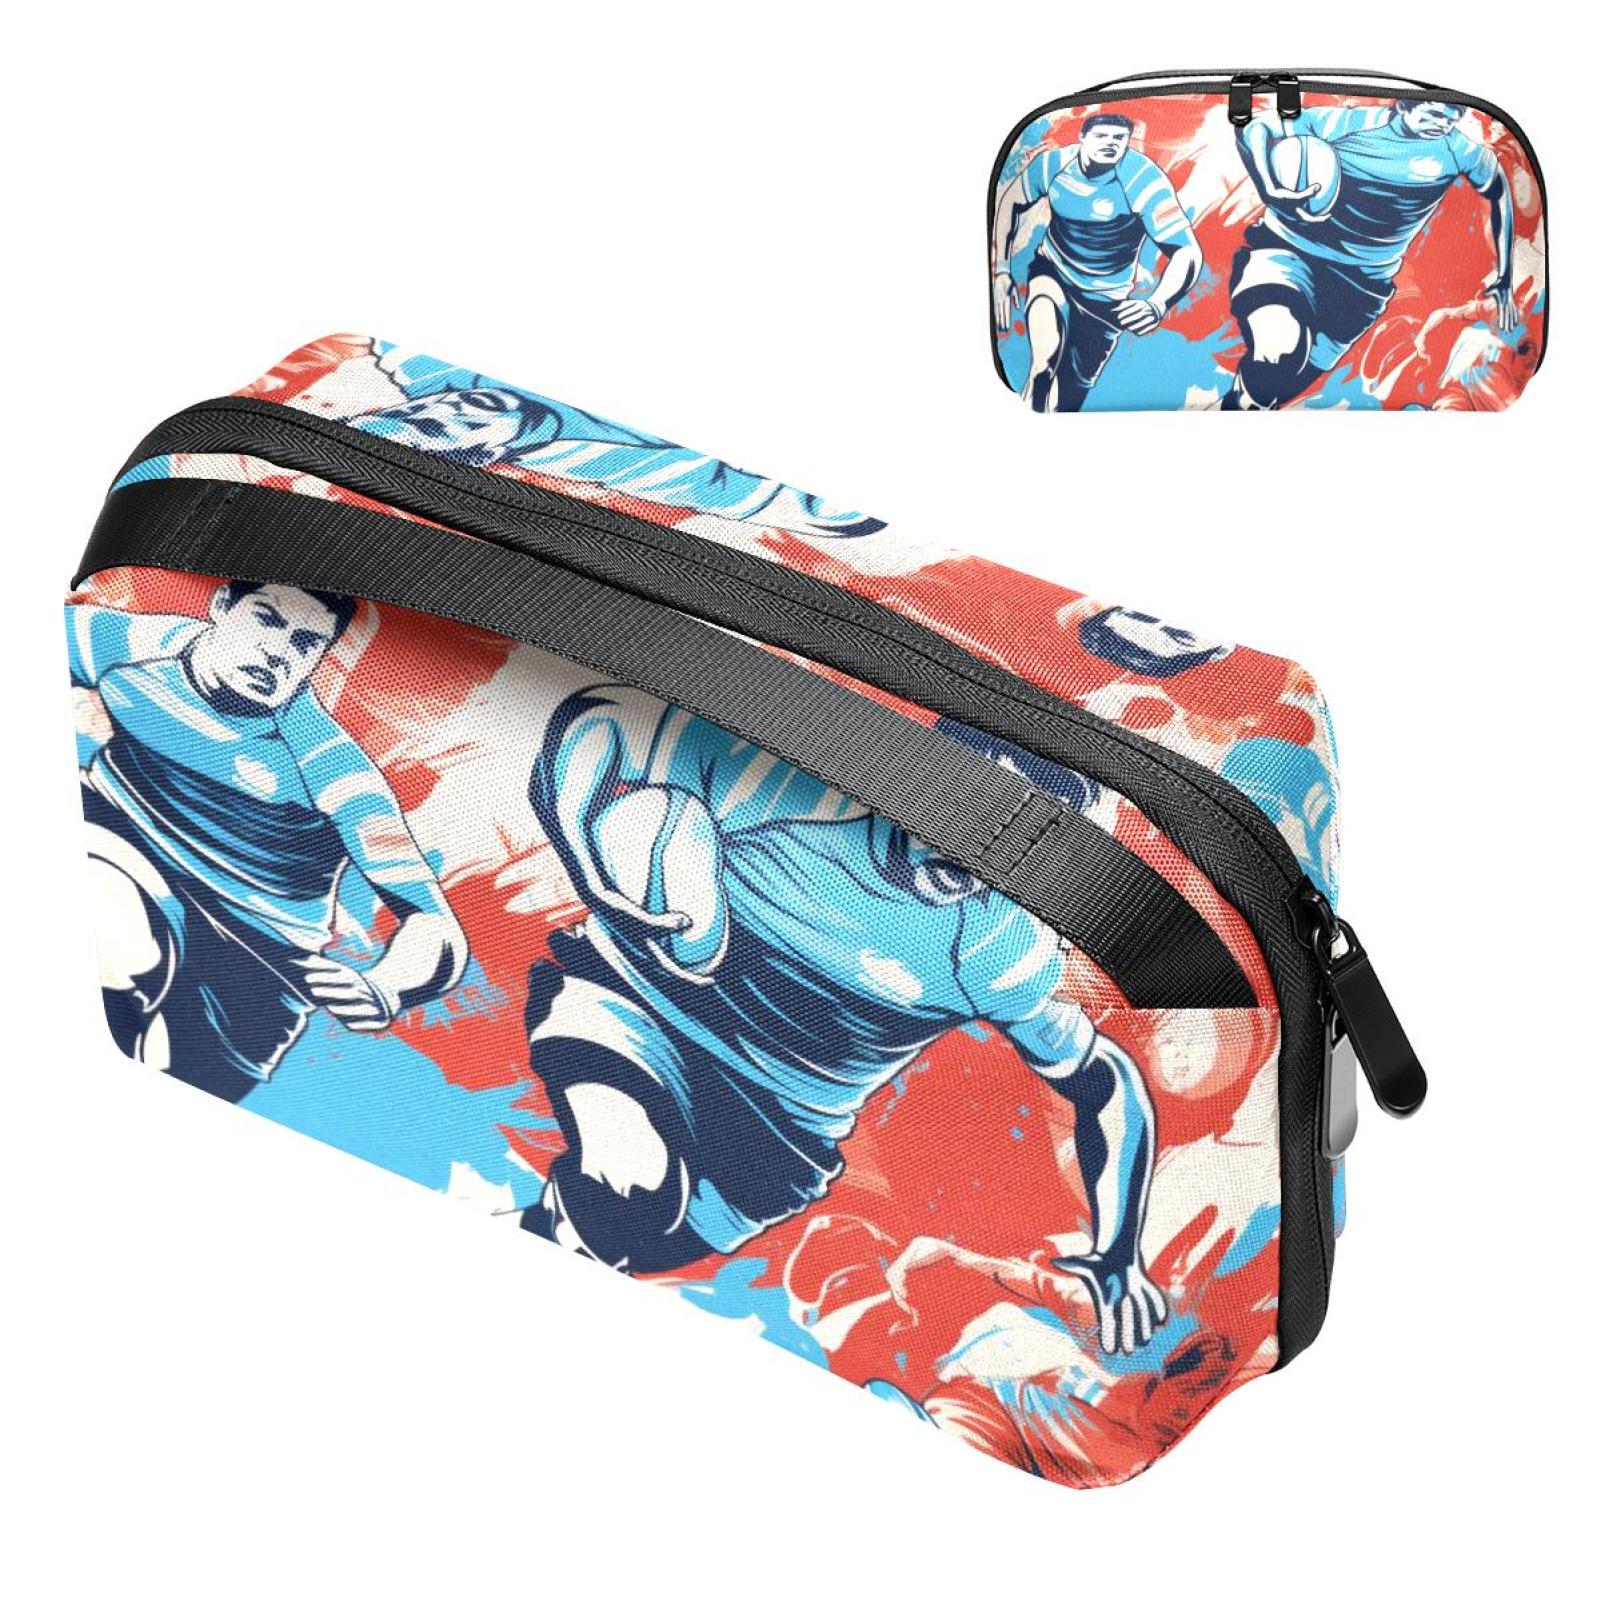 Football Hard Drive Case - Waterproof Oxford Fabric Digital Bag for ...